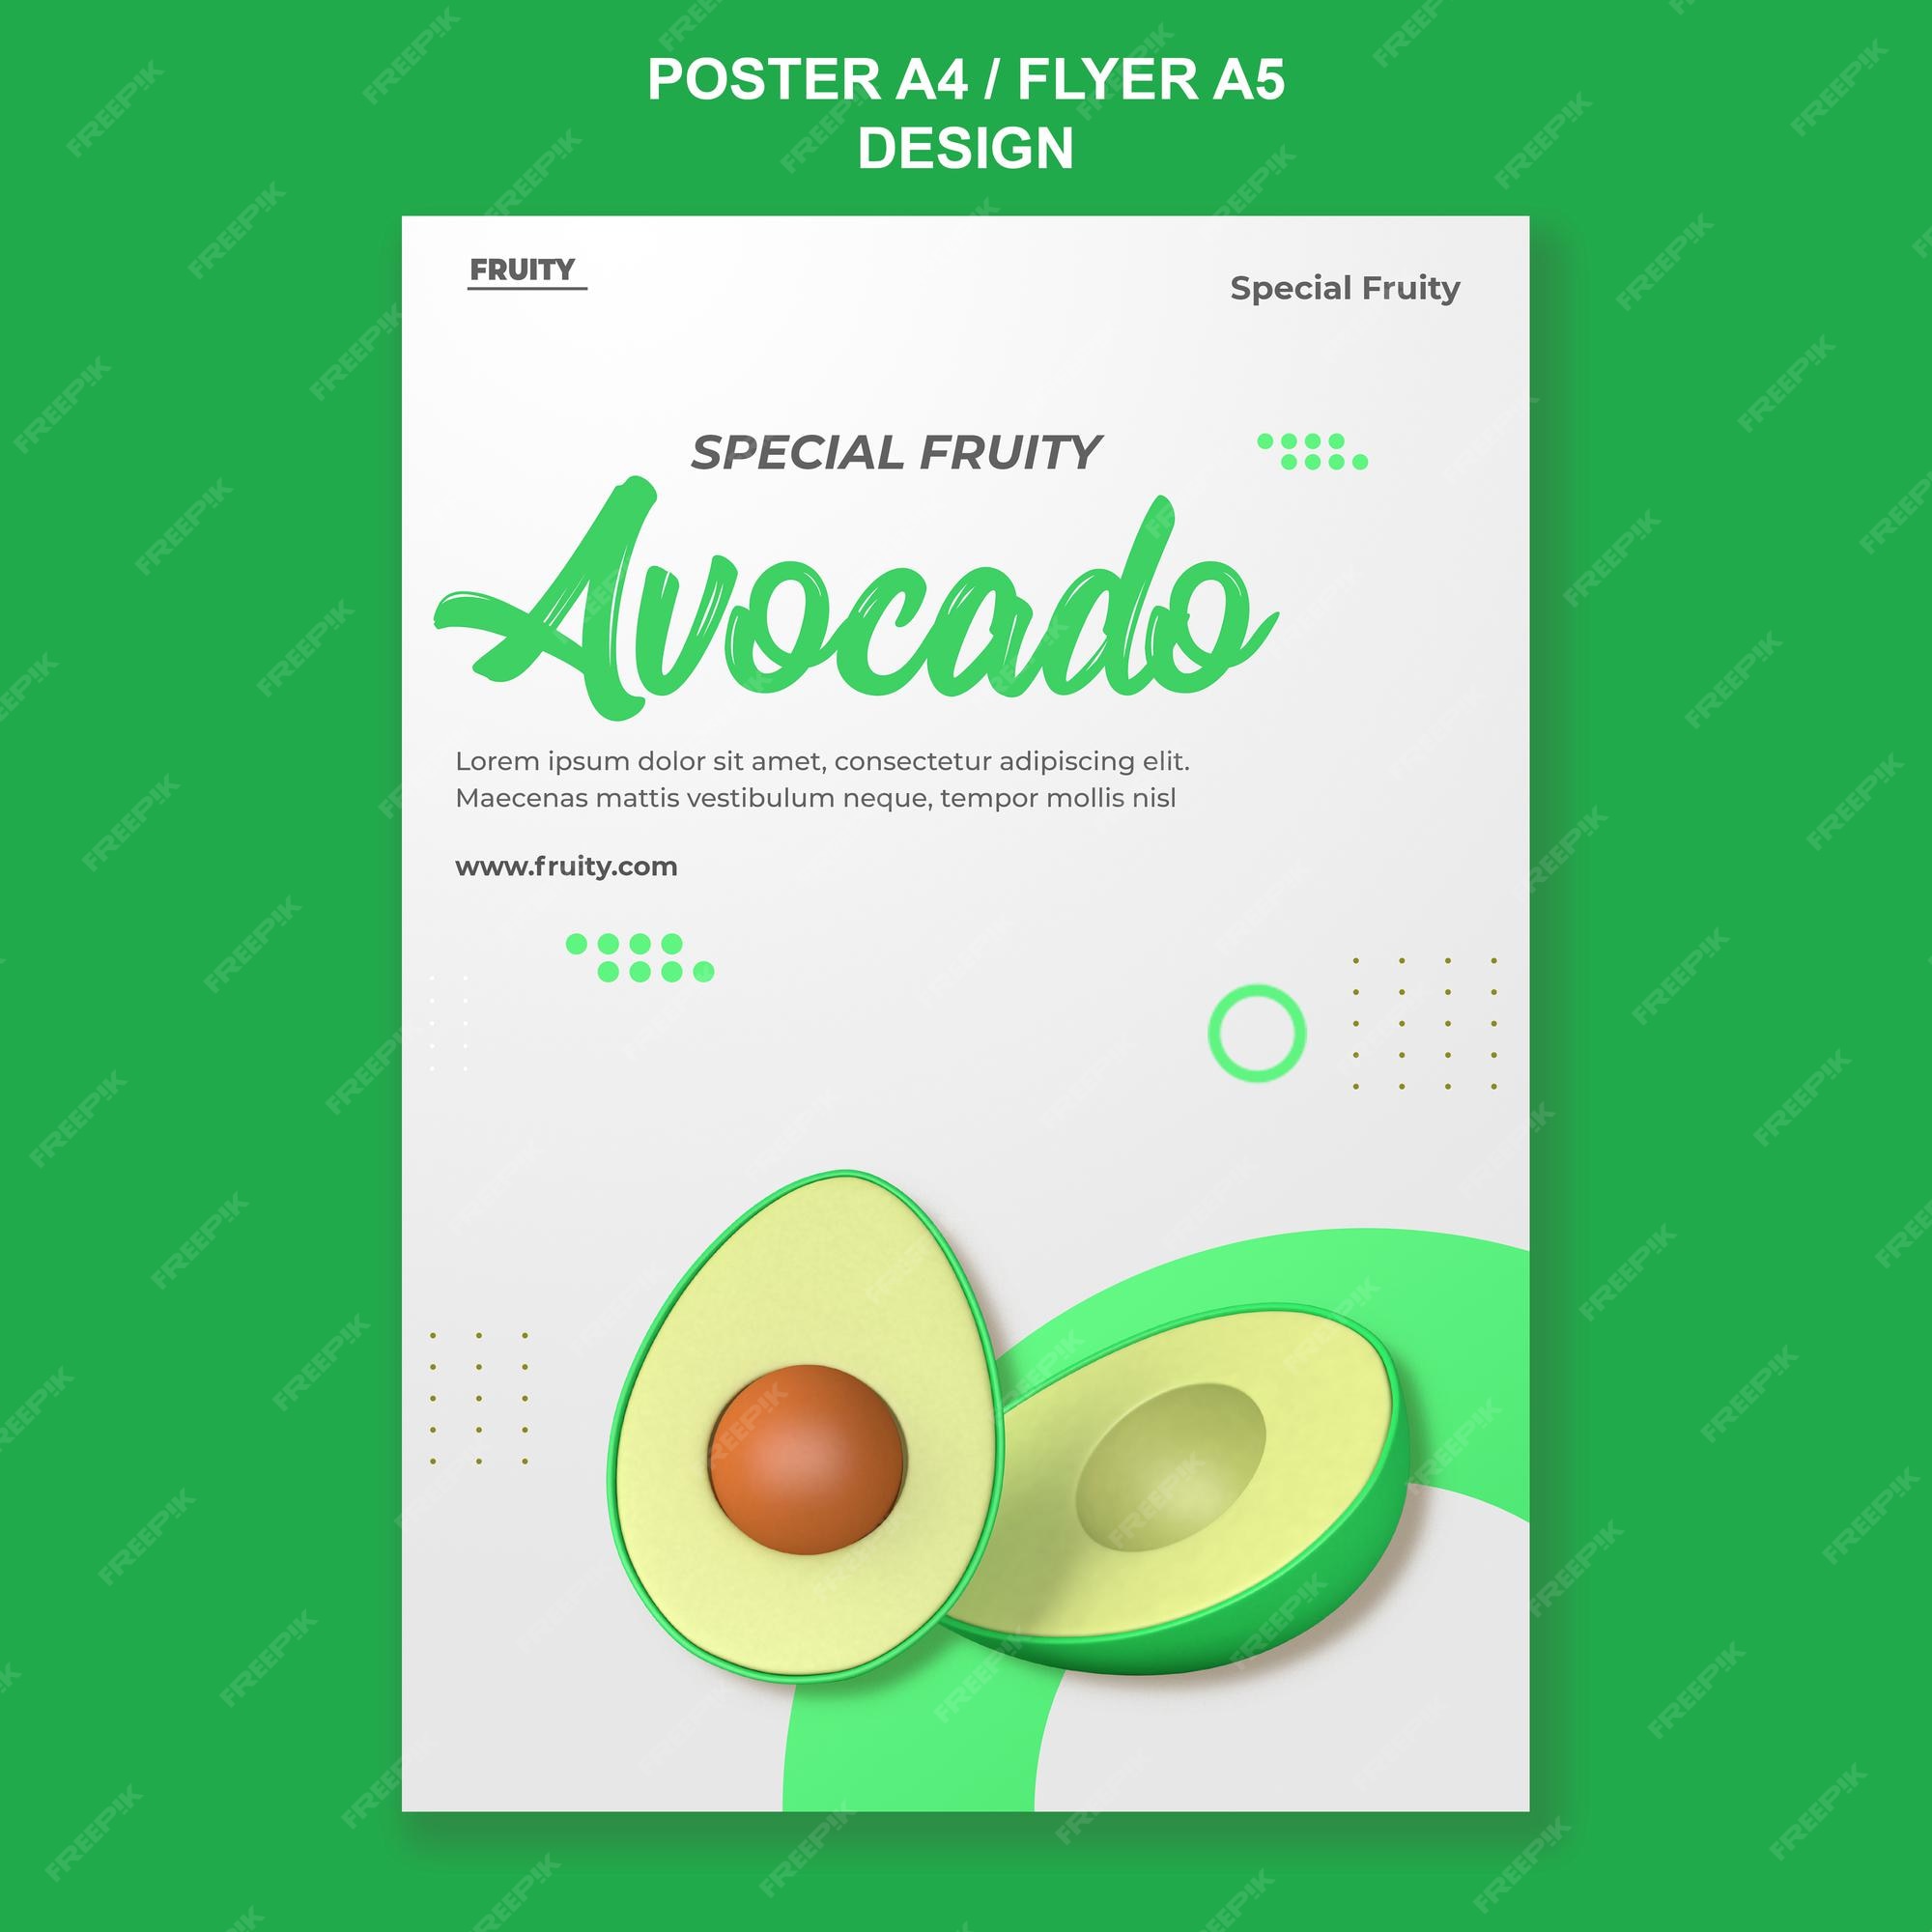 Envision Kostumer Spænde Premium PSD | 3d render avocado poster template design